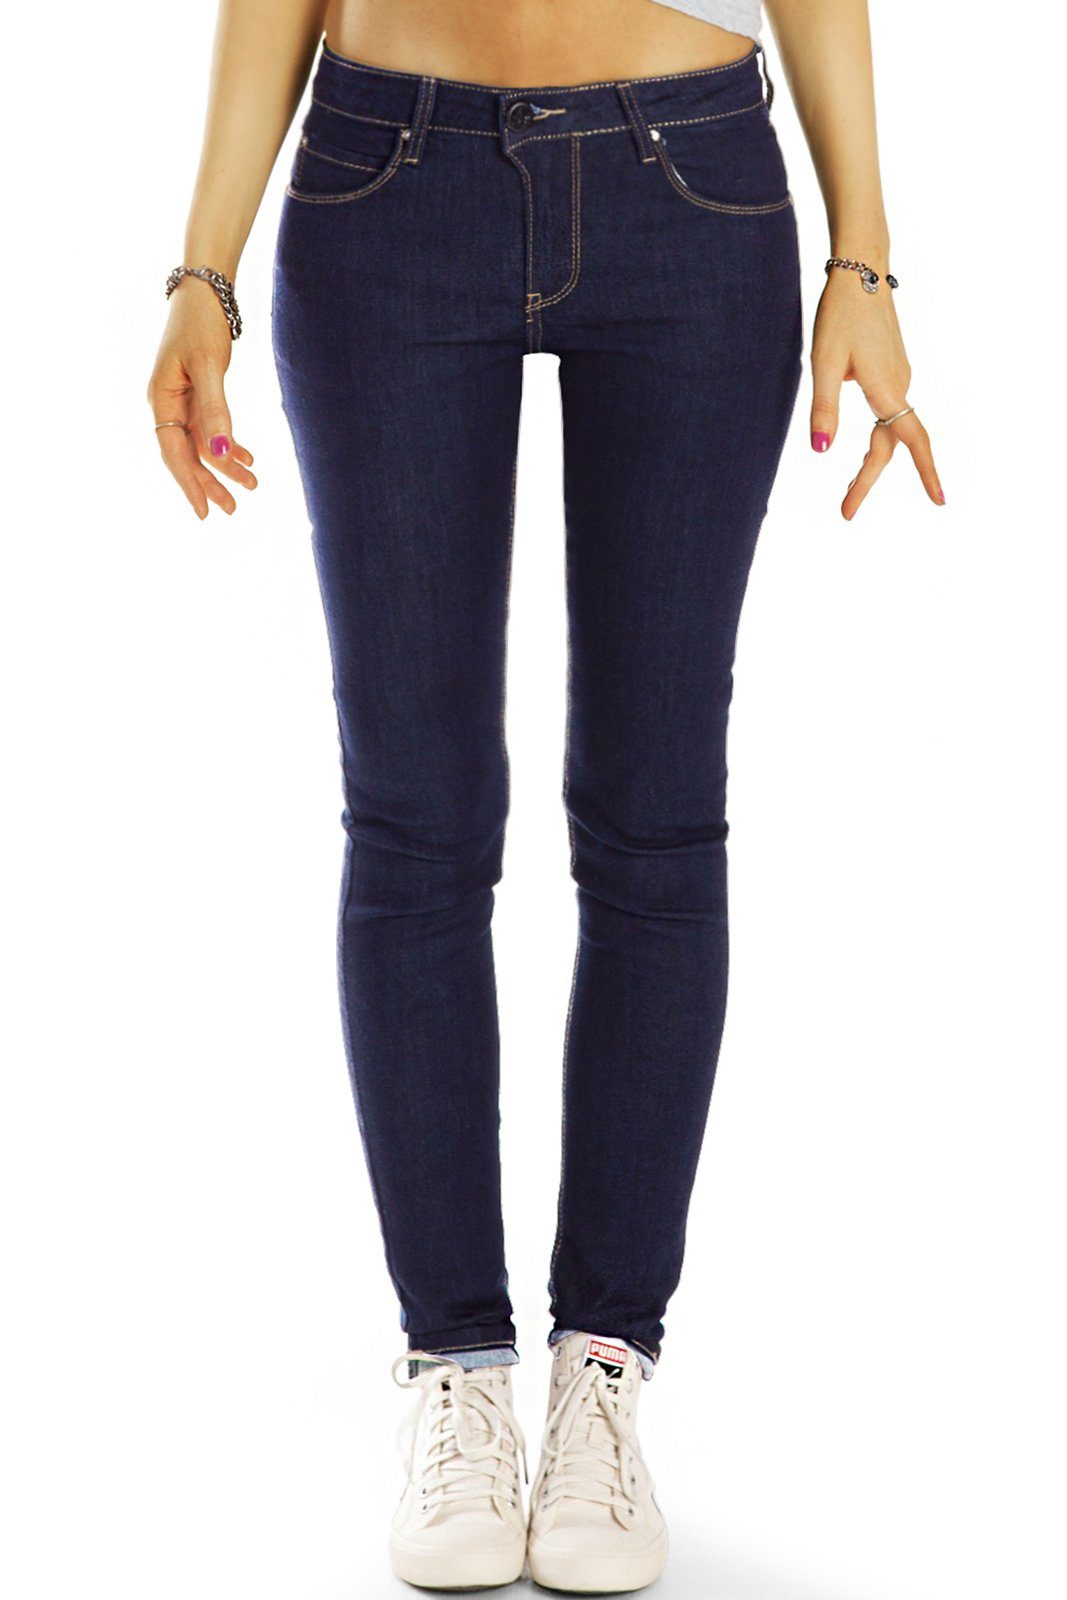 be styled Skinny-fit-Jeans Medium waist slim cut Jeans regular dunkelblaue Jeans stretch Hosen - Damen - j32L-1 mit Stretchanteil, 5 Pocket-Style